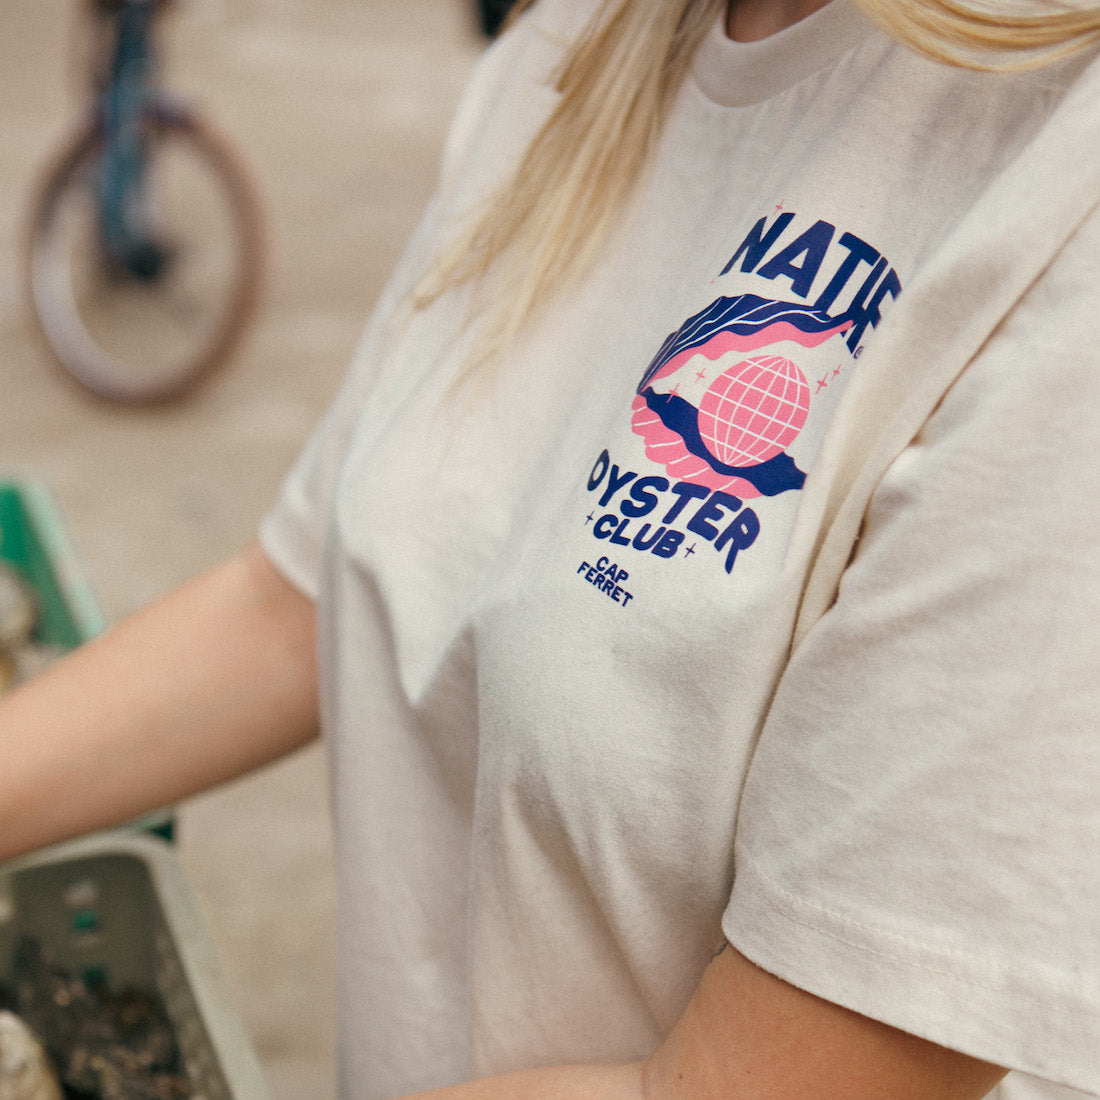 T-shirt Natif Oyster Club